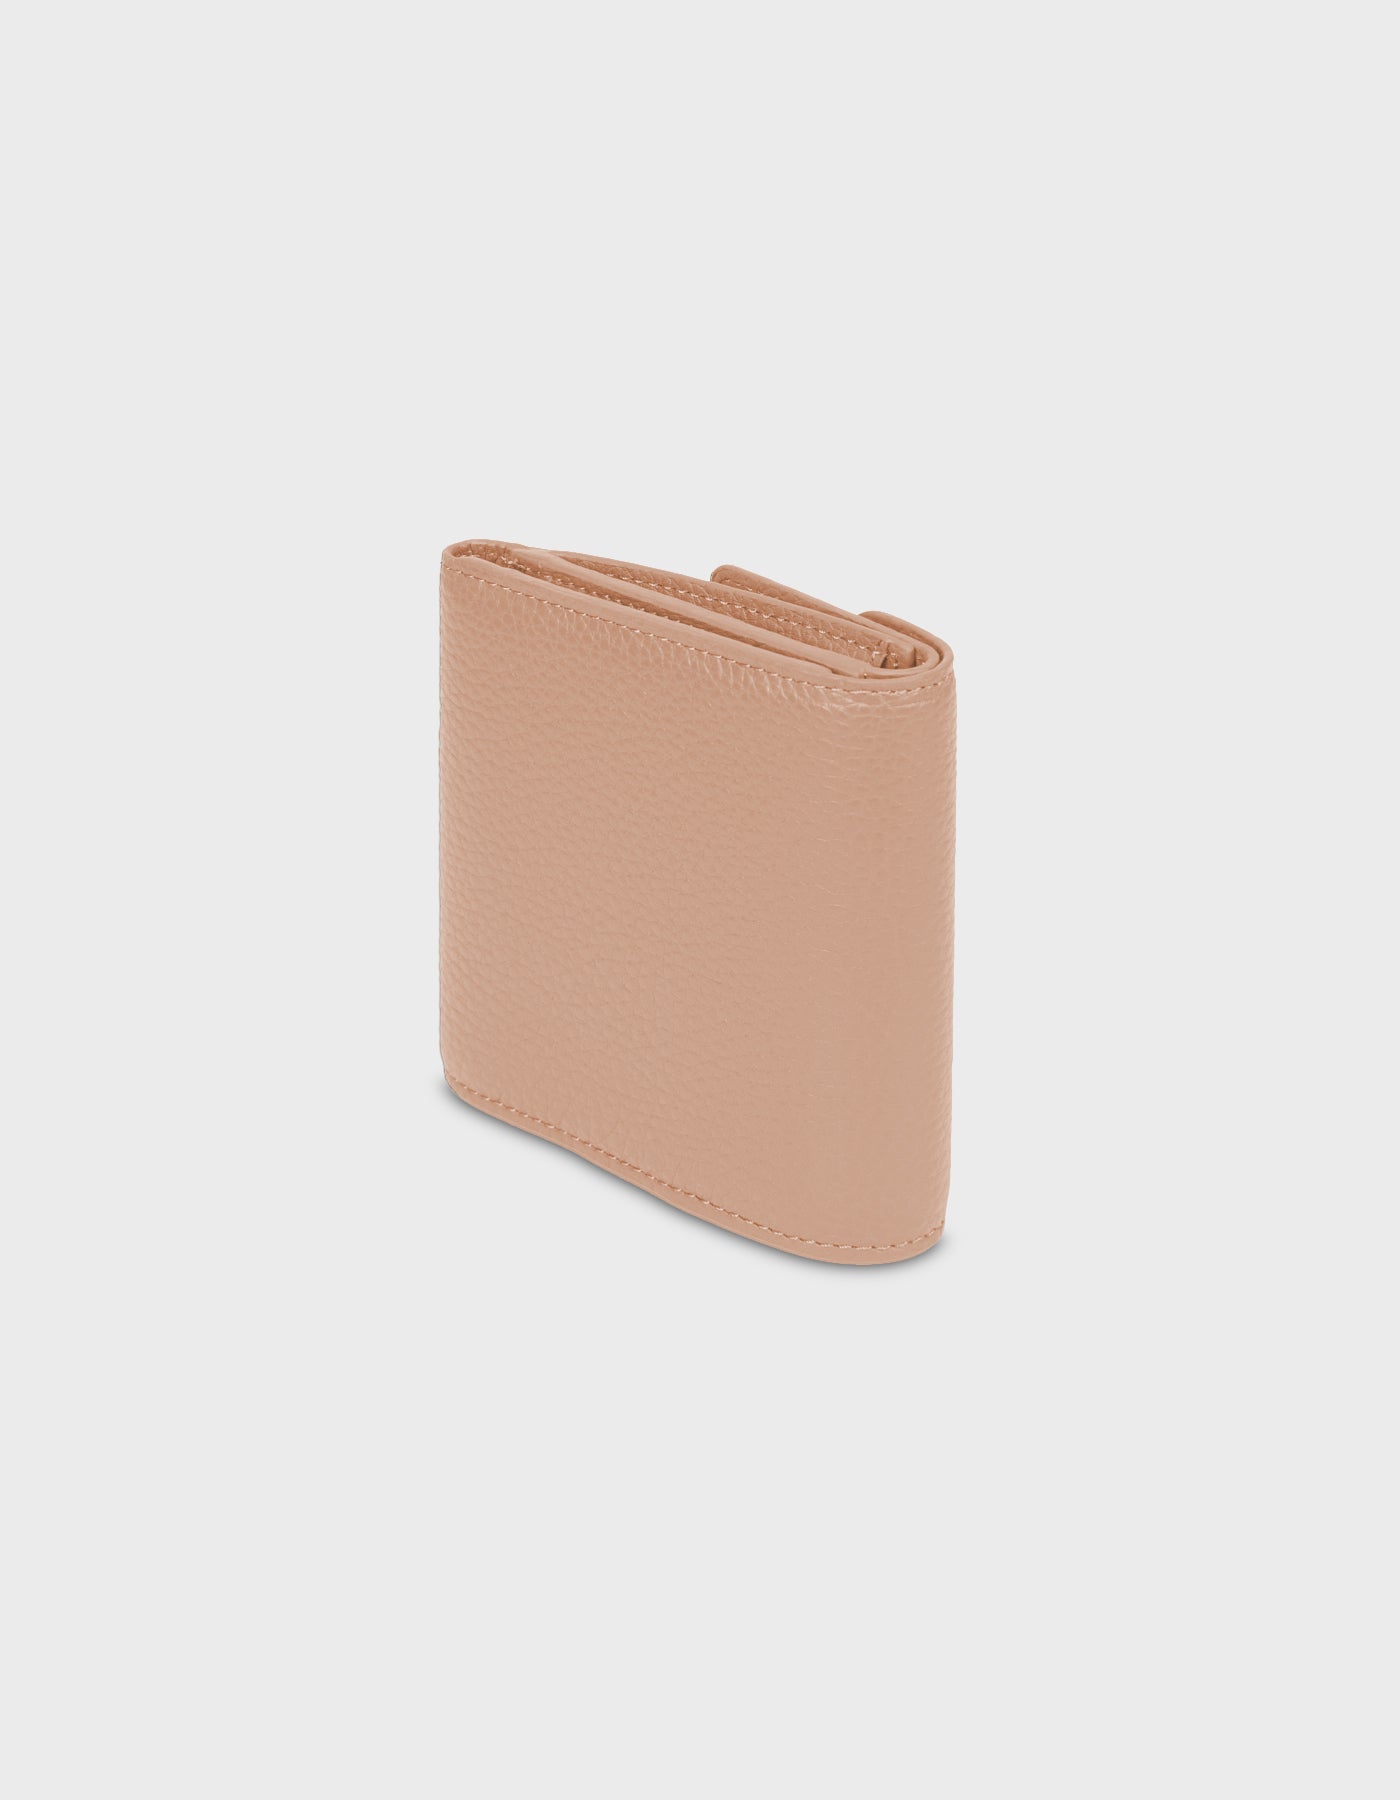 HiVa Atelier | Larus Compact Wallet Nude | Beautiful and Versatile